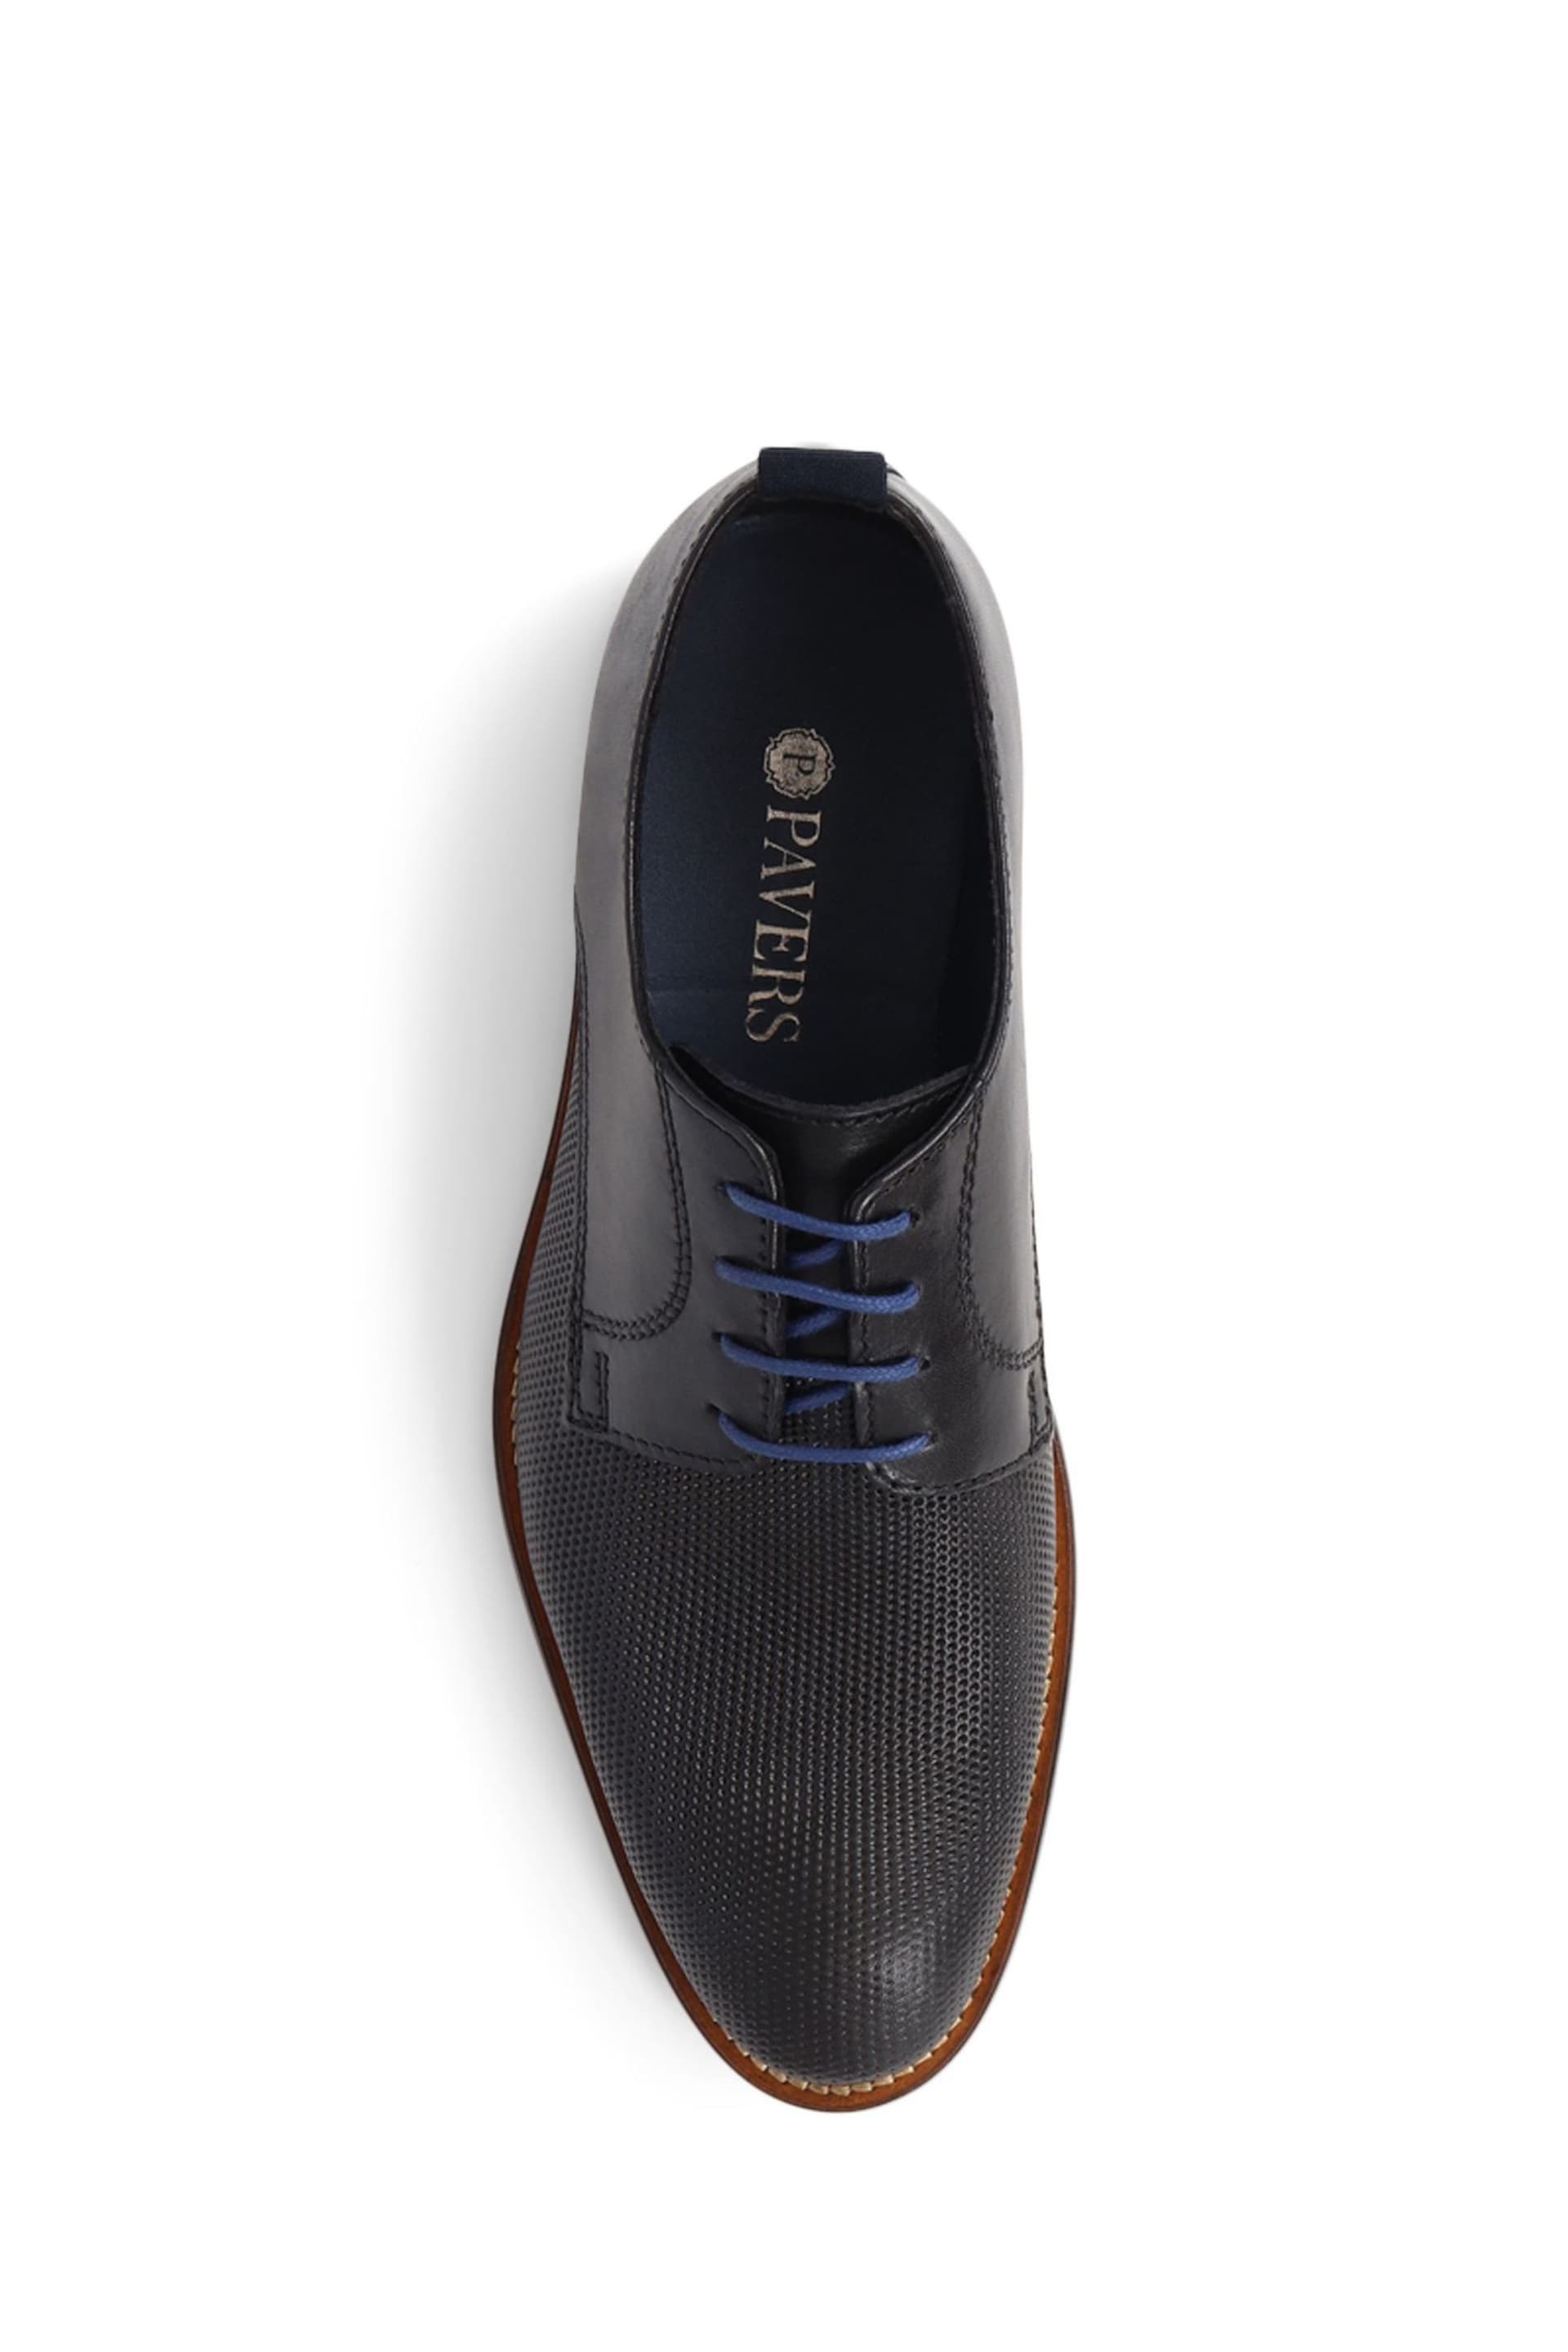 Pavers Lace-Up Smart Black Shoes - Image 4 of 5